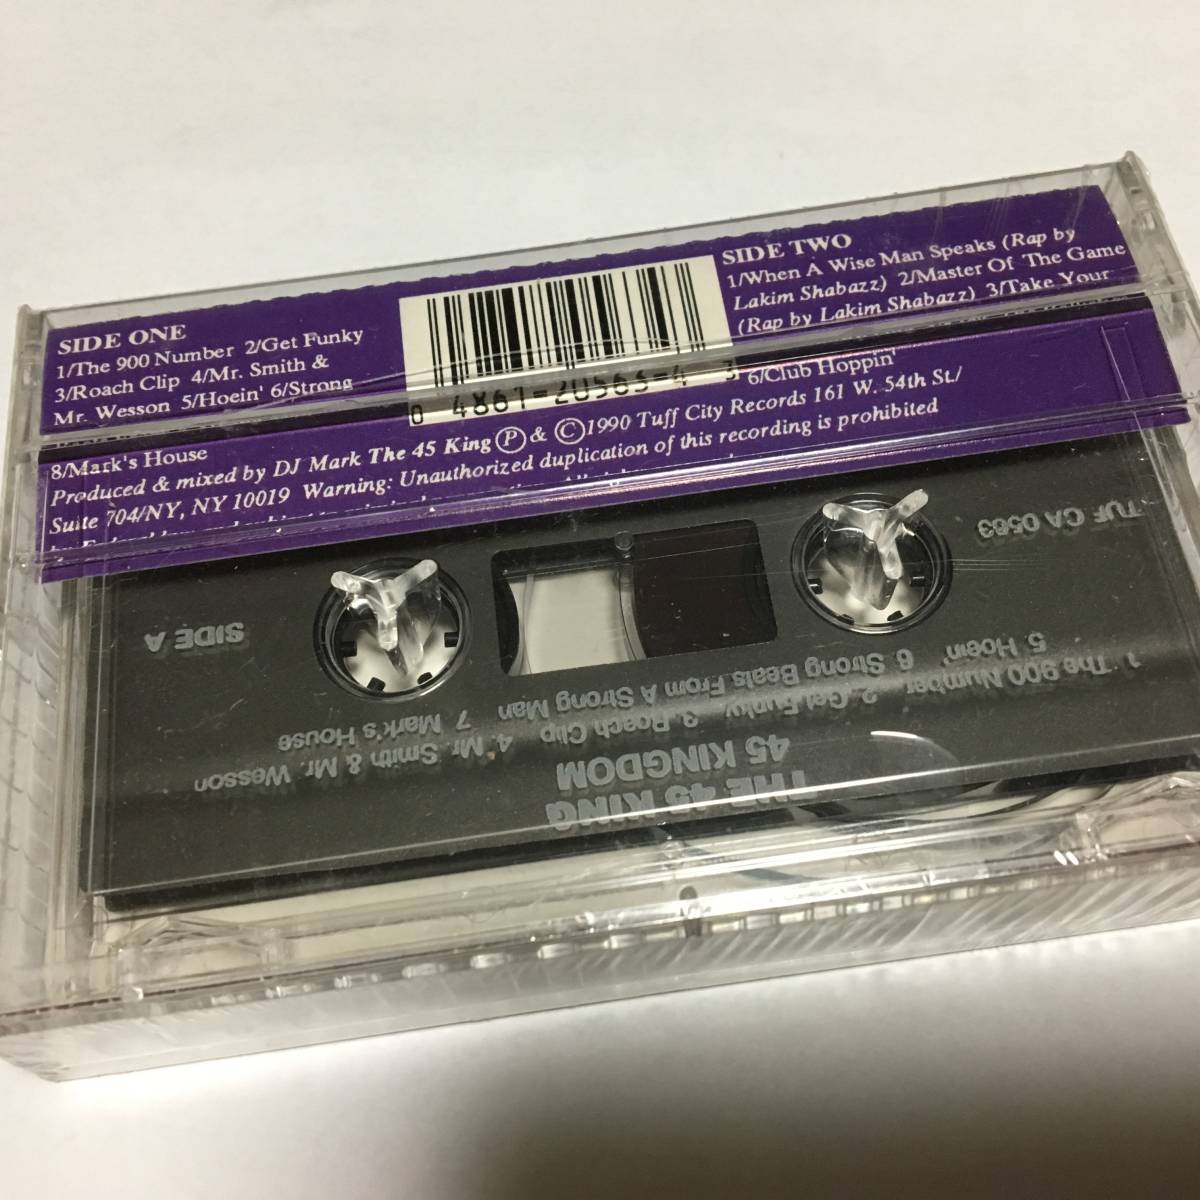 45 KING / 45 KINGDOM cassette tape TUFF CITY 1990 unopened 